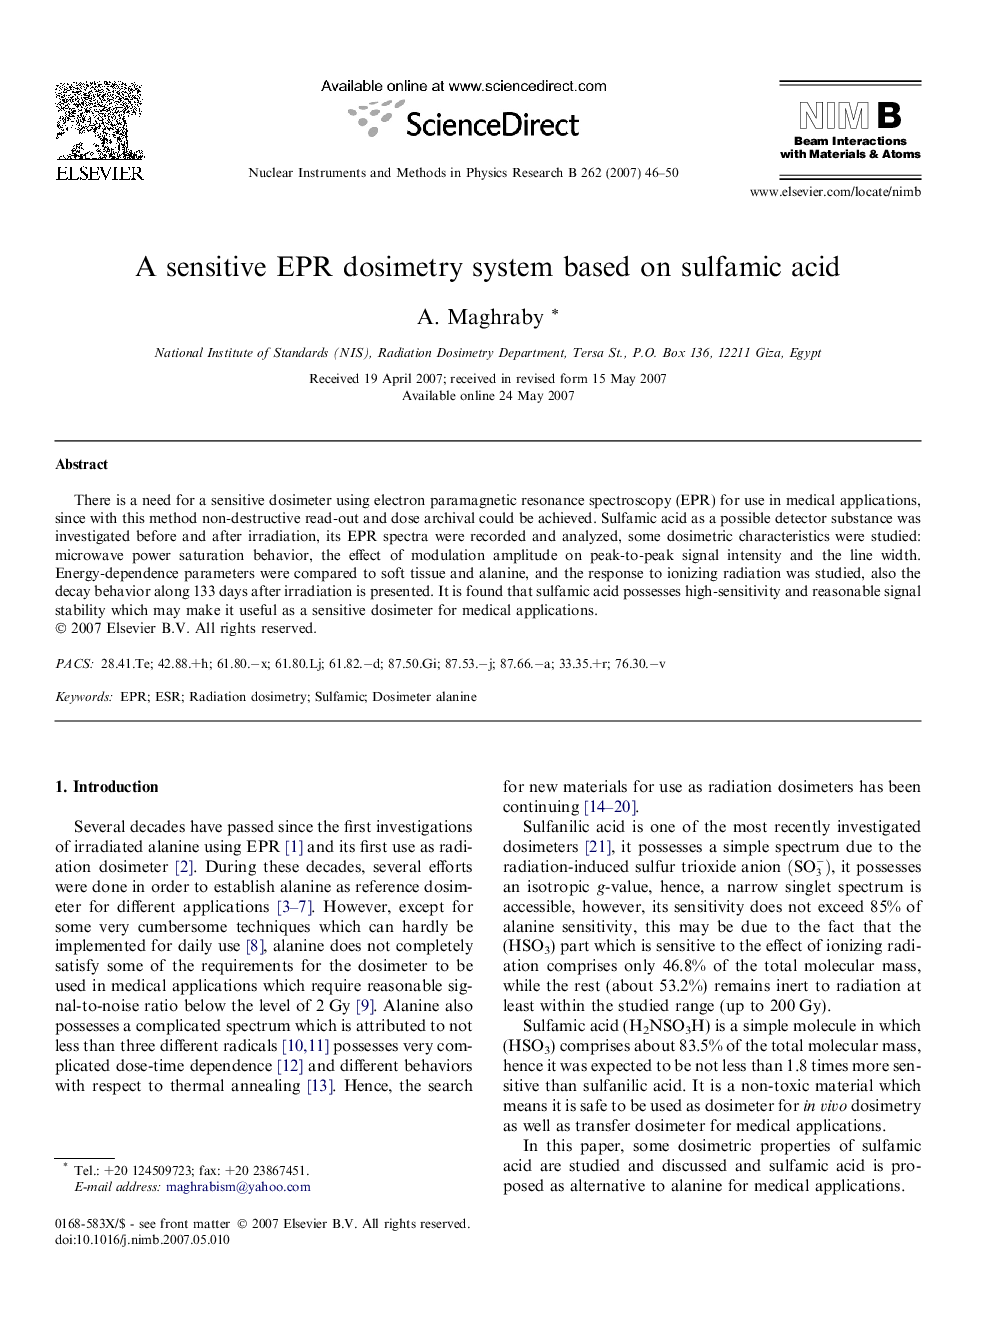 A sensitive EPR dosimetry system based on sulfamic acid